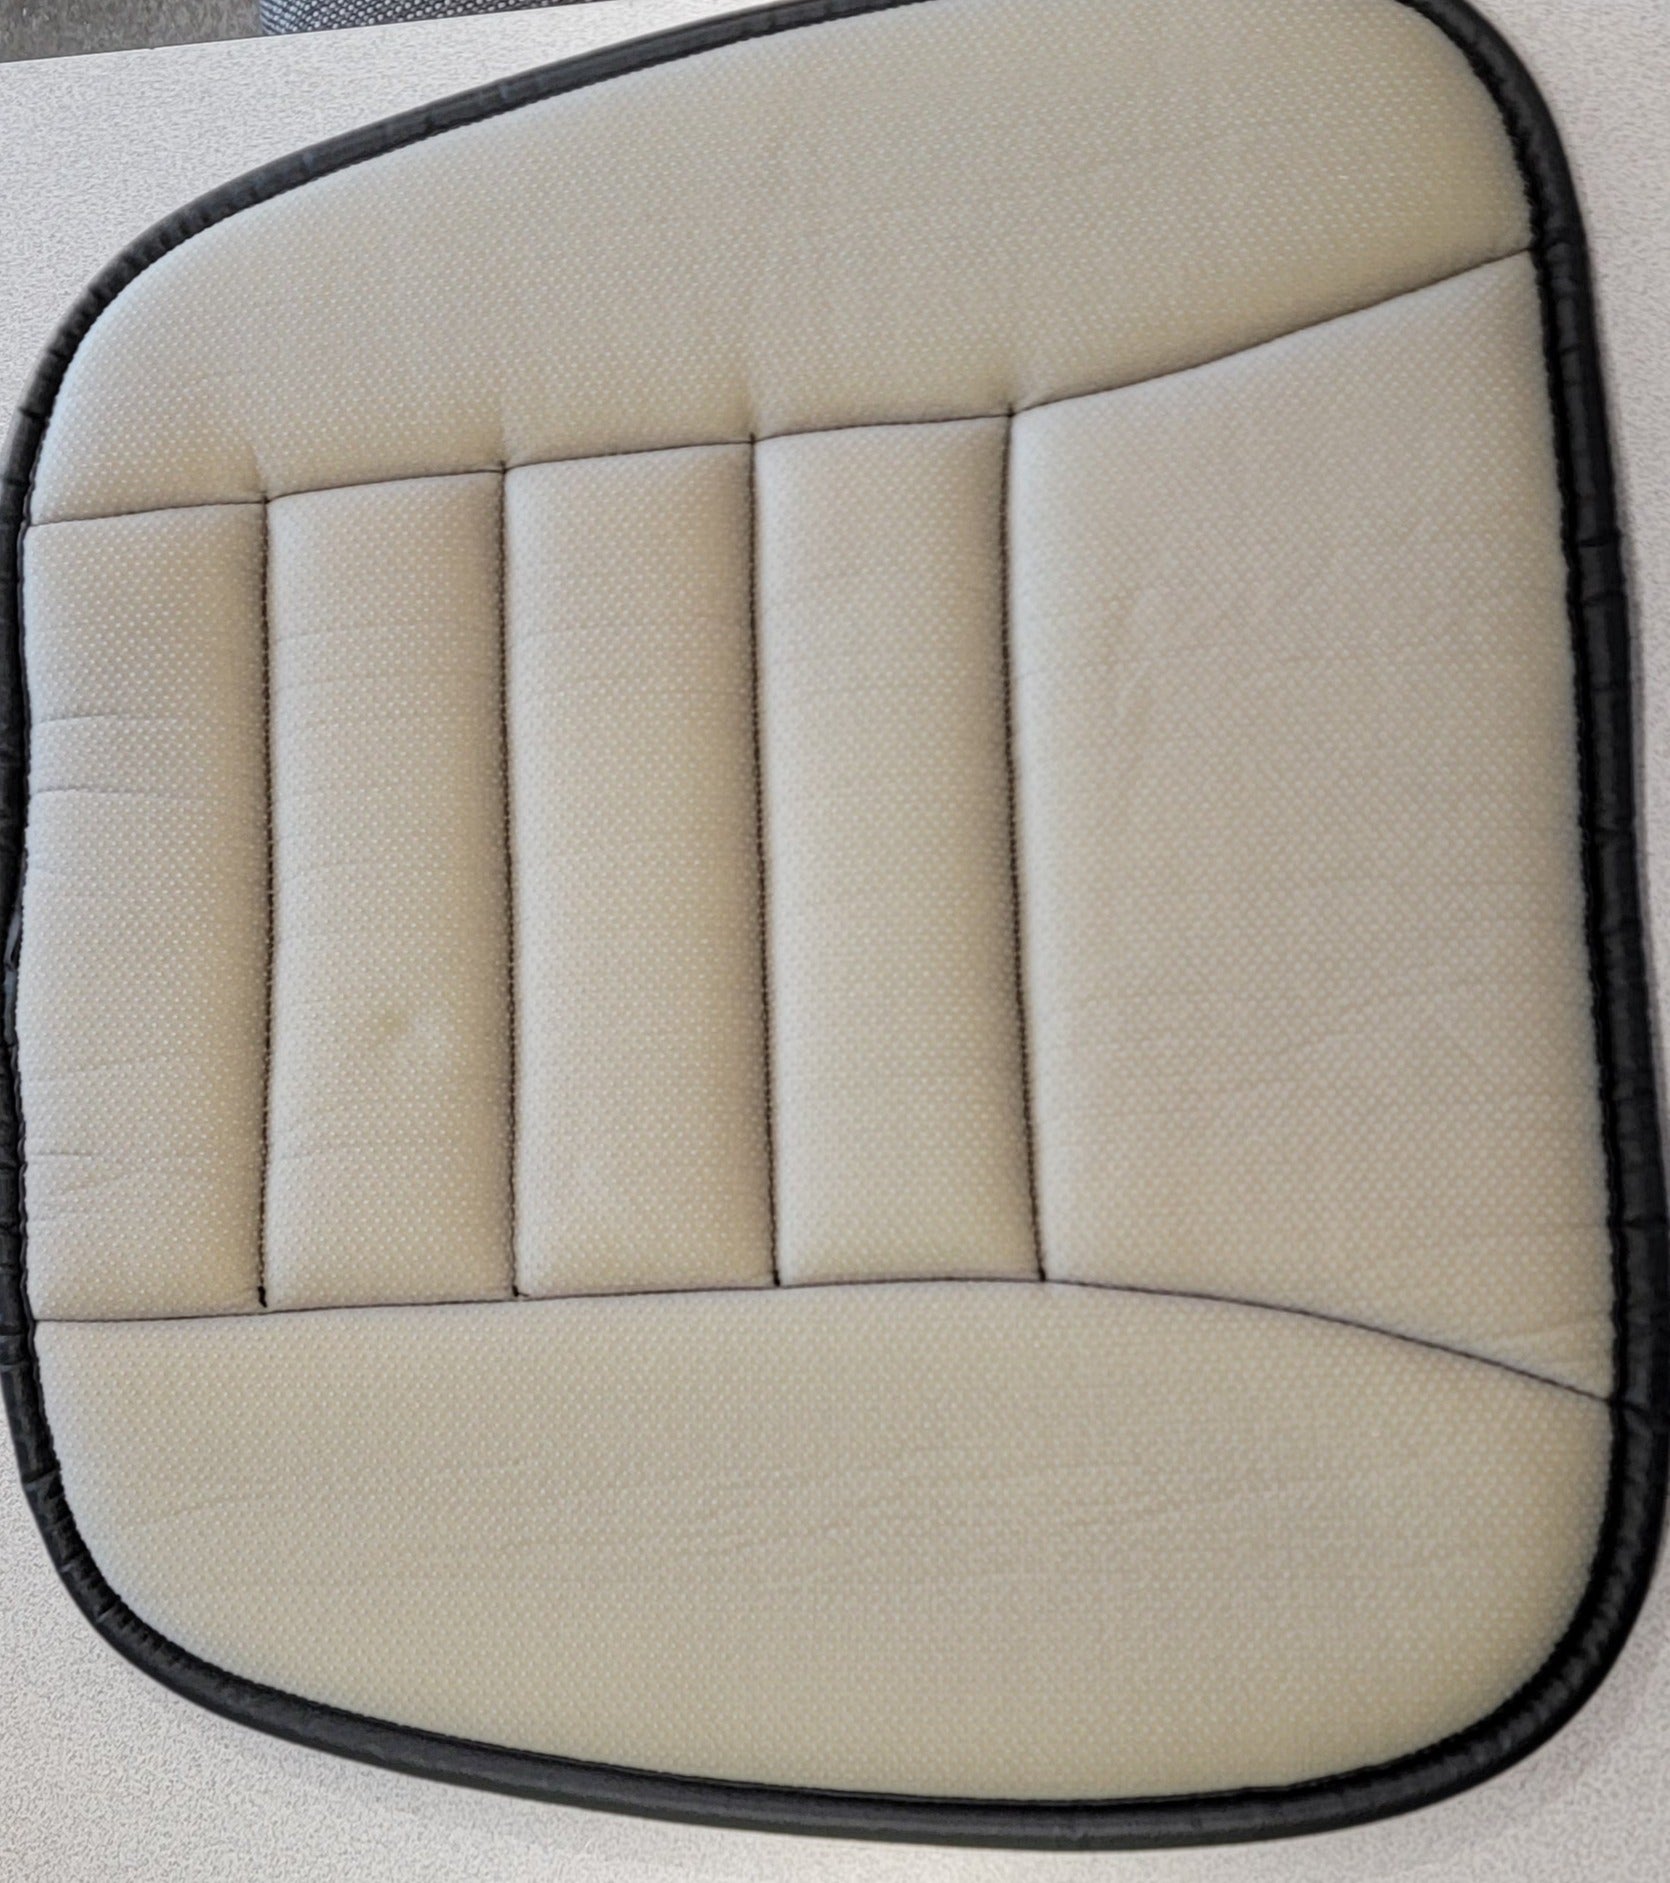 RaoRanDang Car Seat Cushion Pad for Car Driver Seat Office Chair Home Use Memory Foam Seat Cushion (Upgrade 5 cm, A Black)